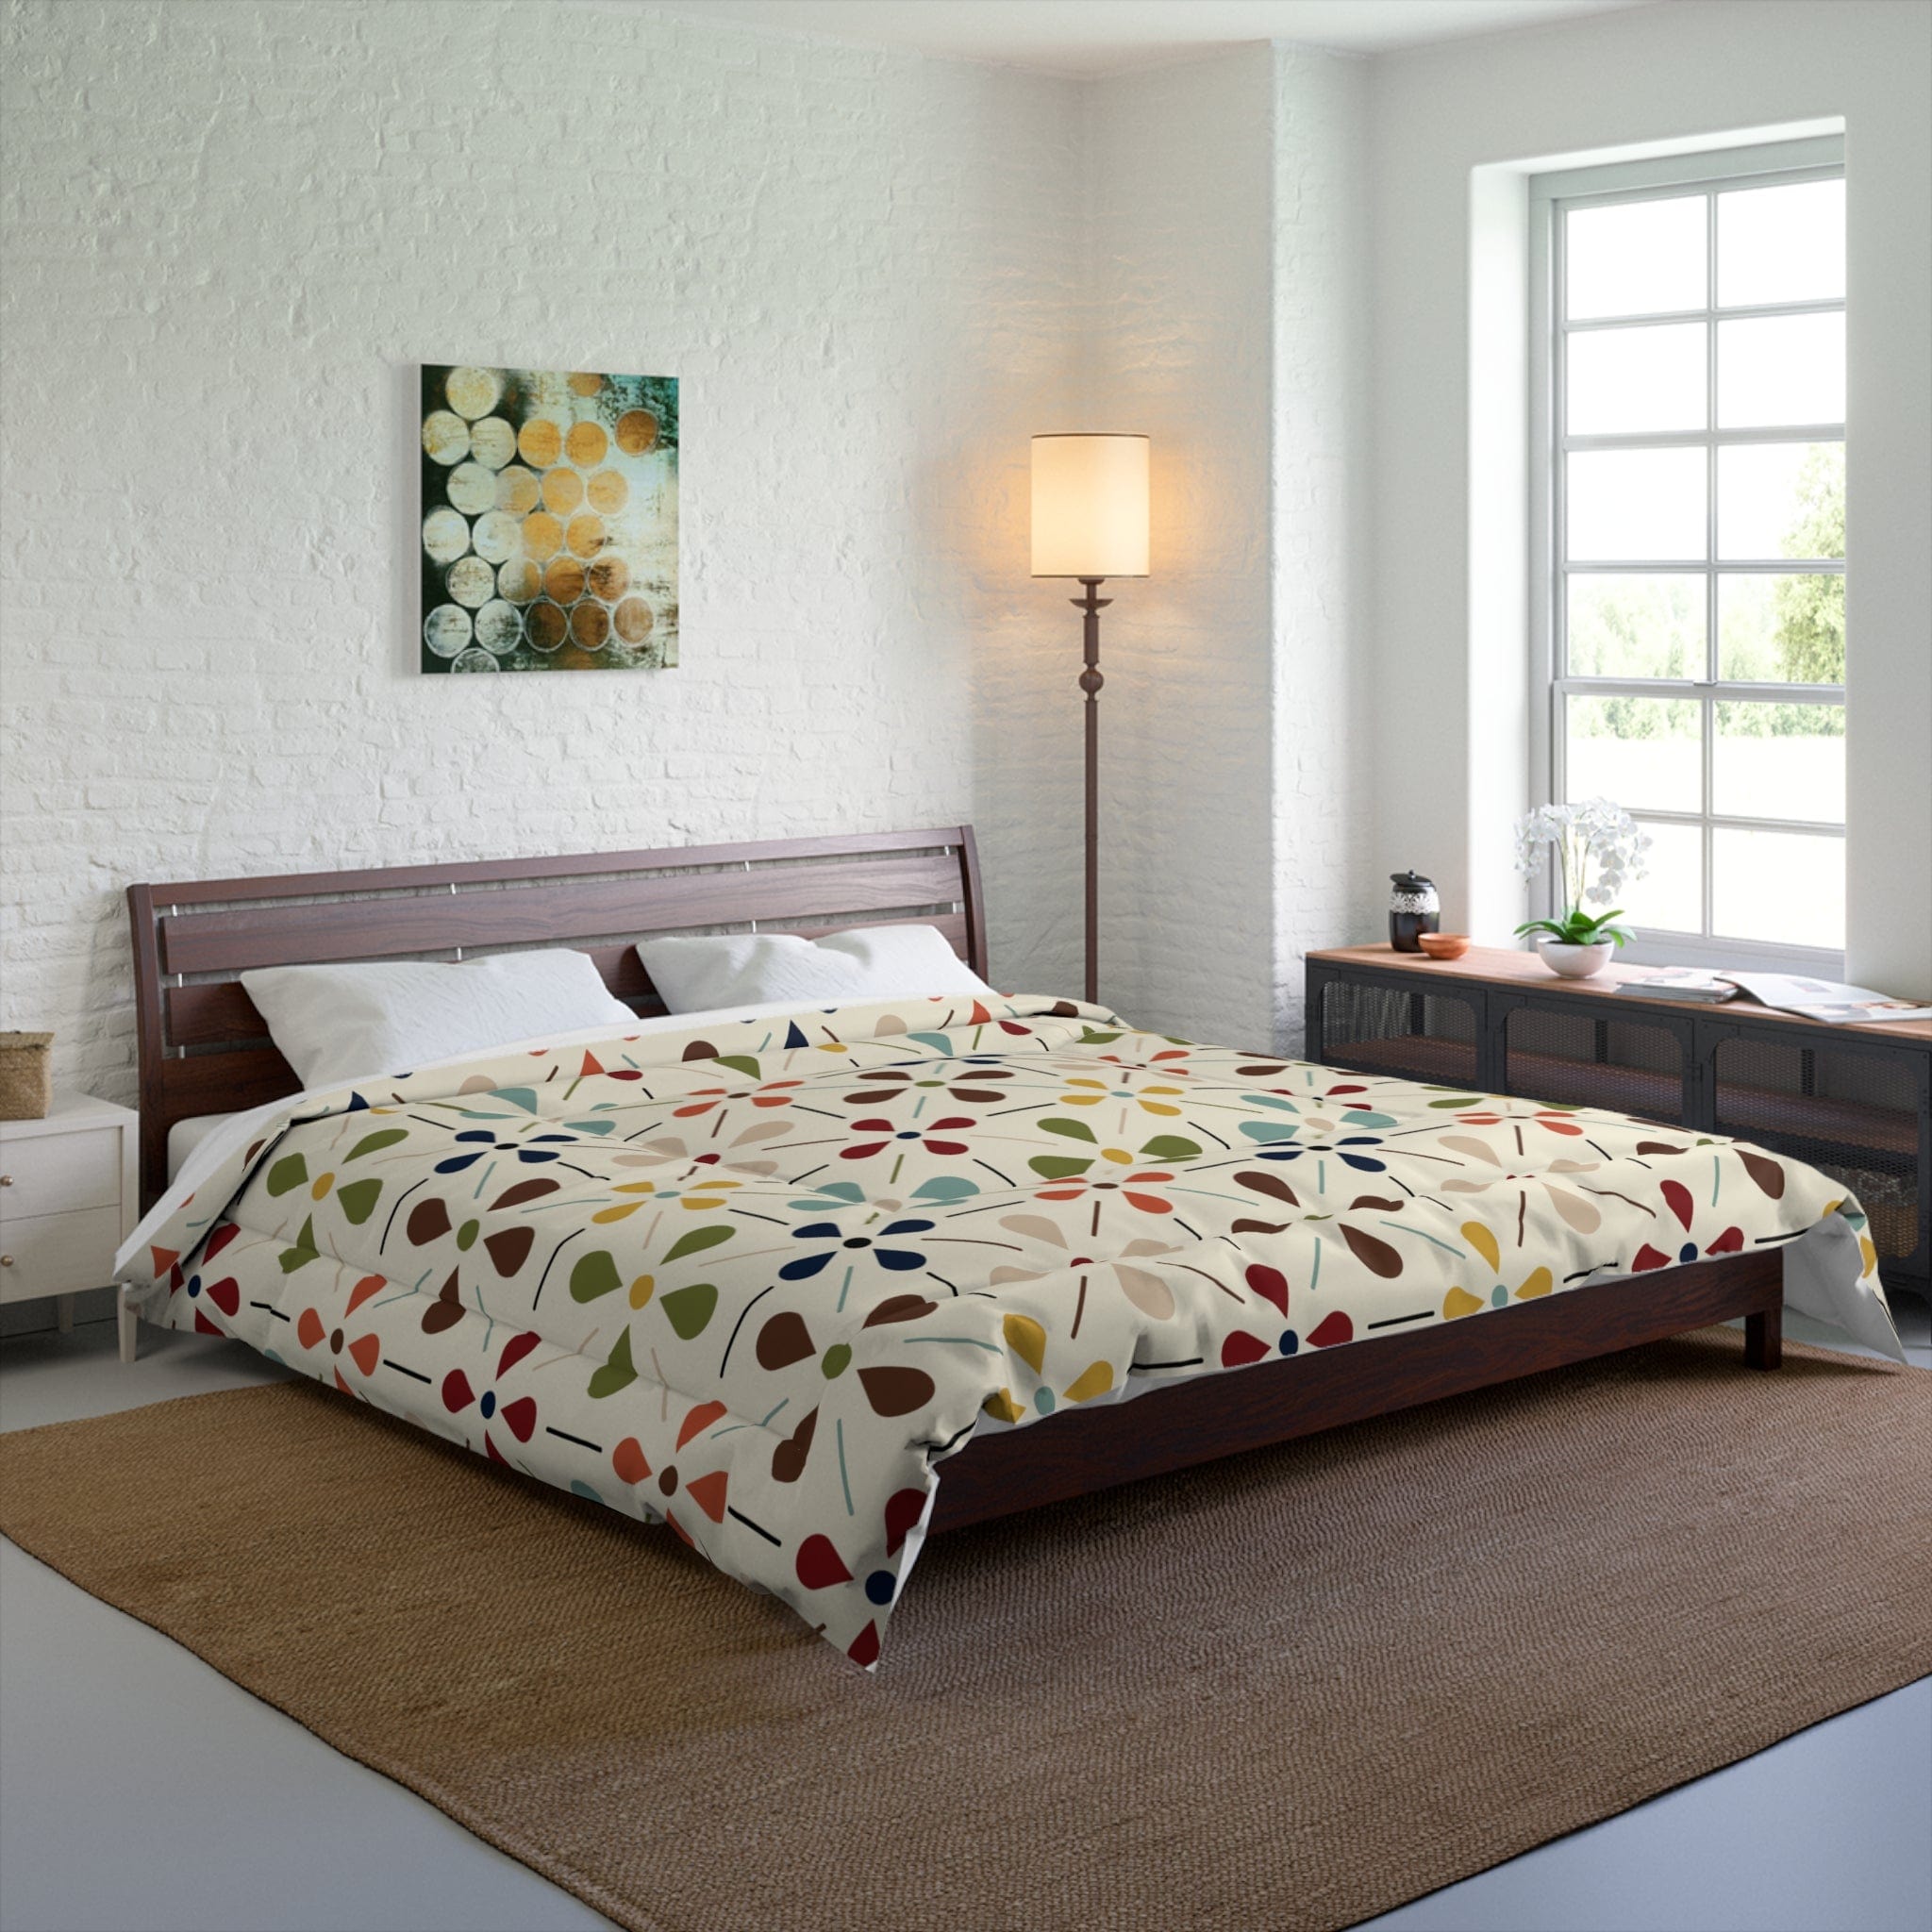 Kate McEnroe New York MCM Floral Comforter, Minimalist Scandinavian Modern Danish Retro Whimsical Blooms BeddingComforters21234965686563144616